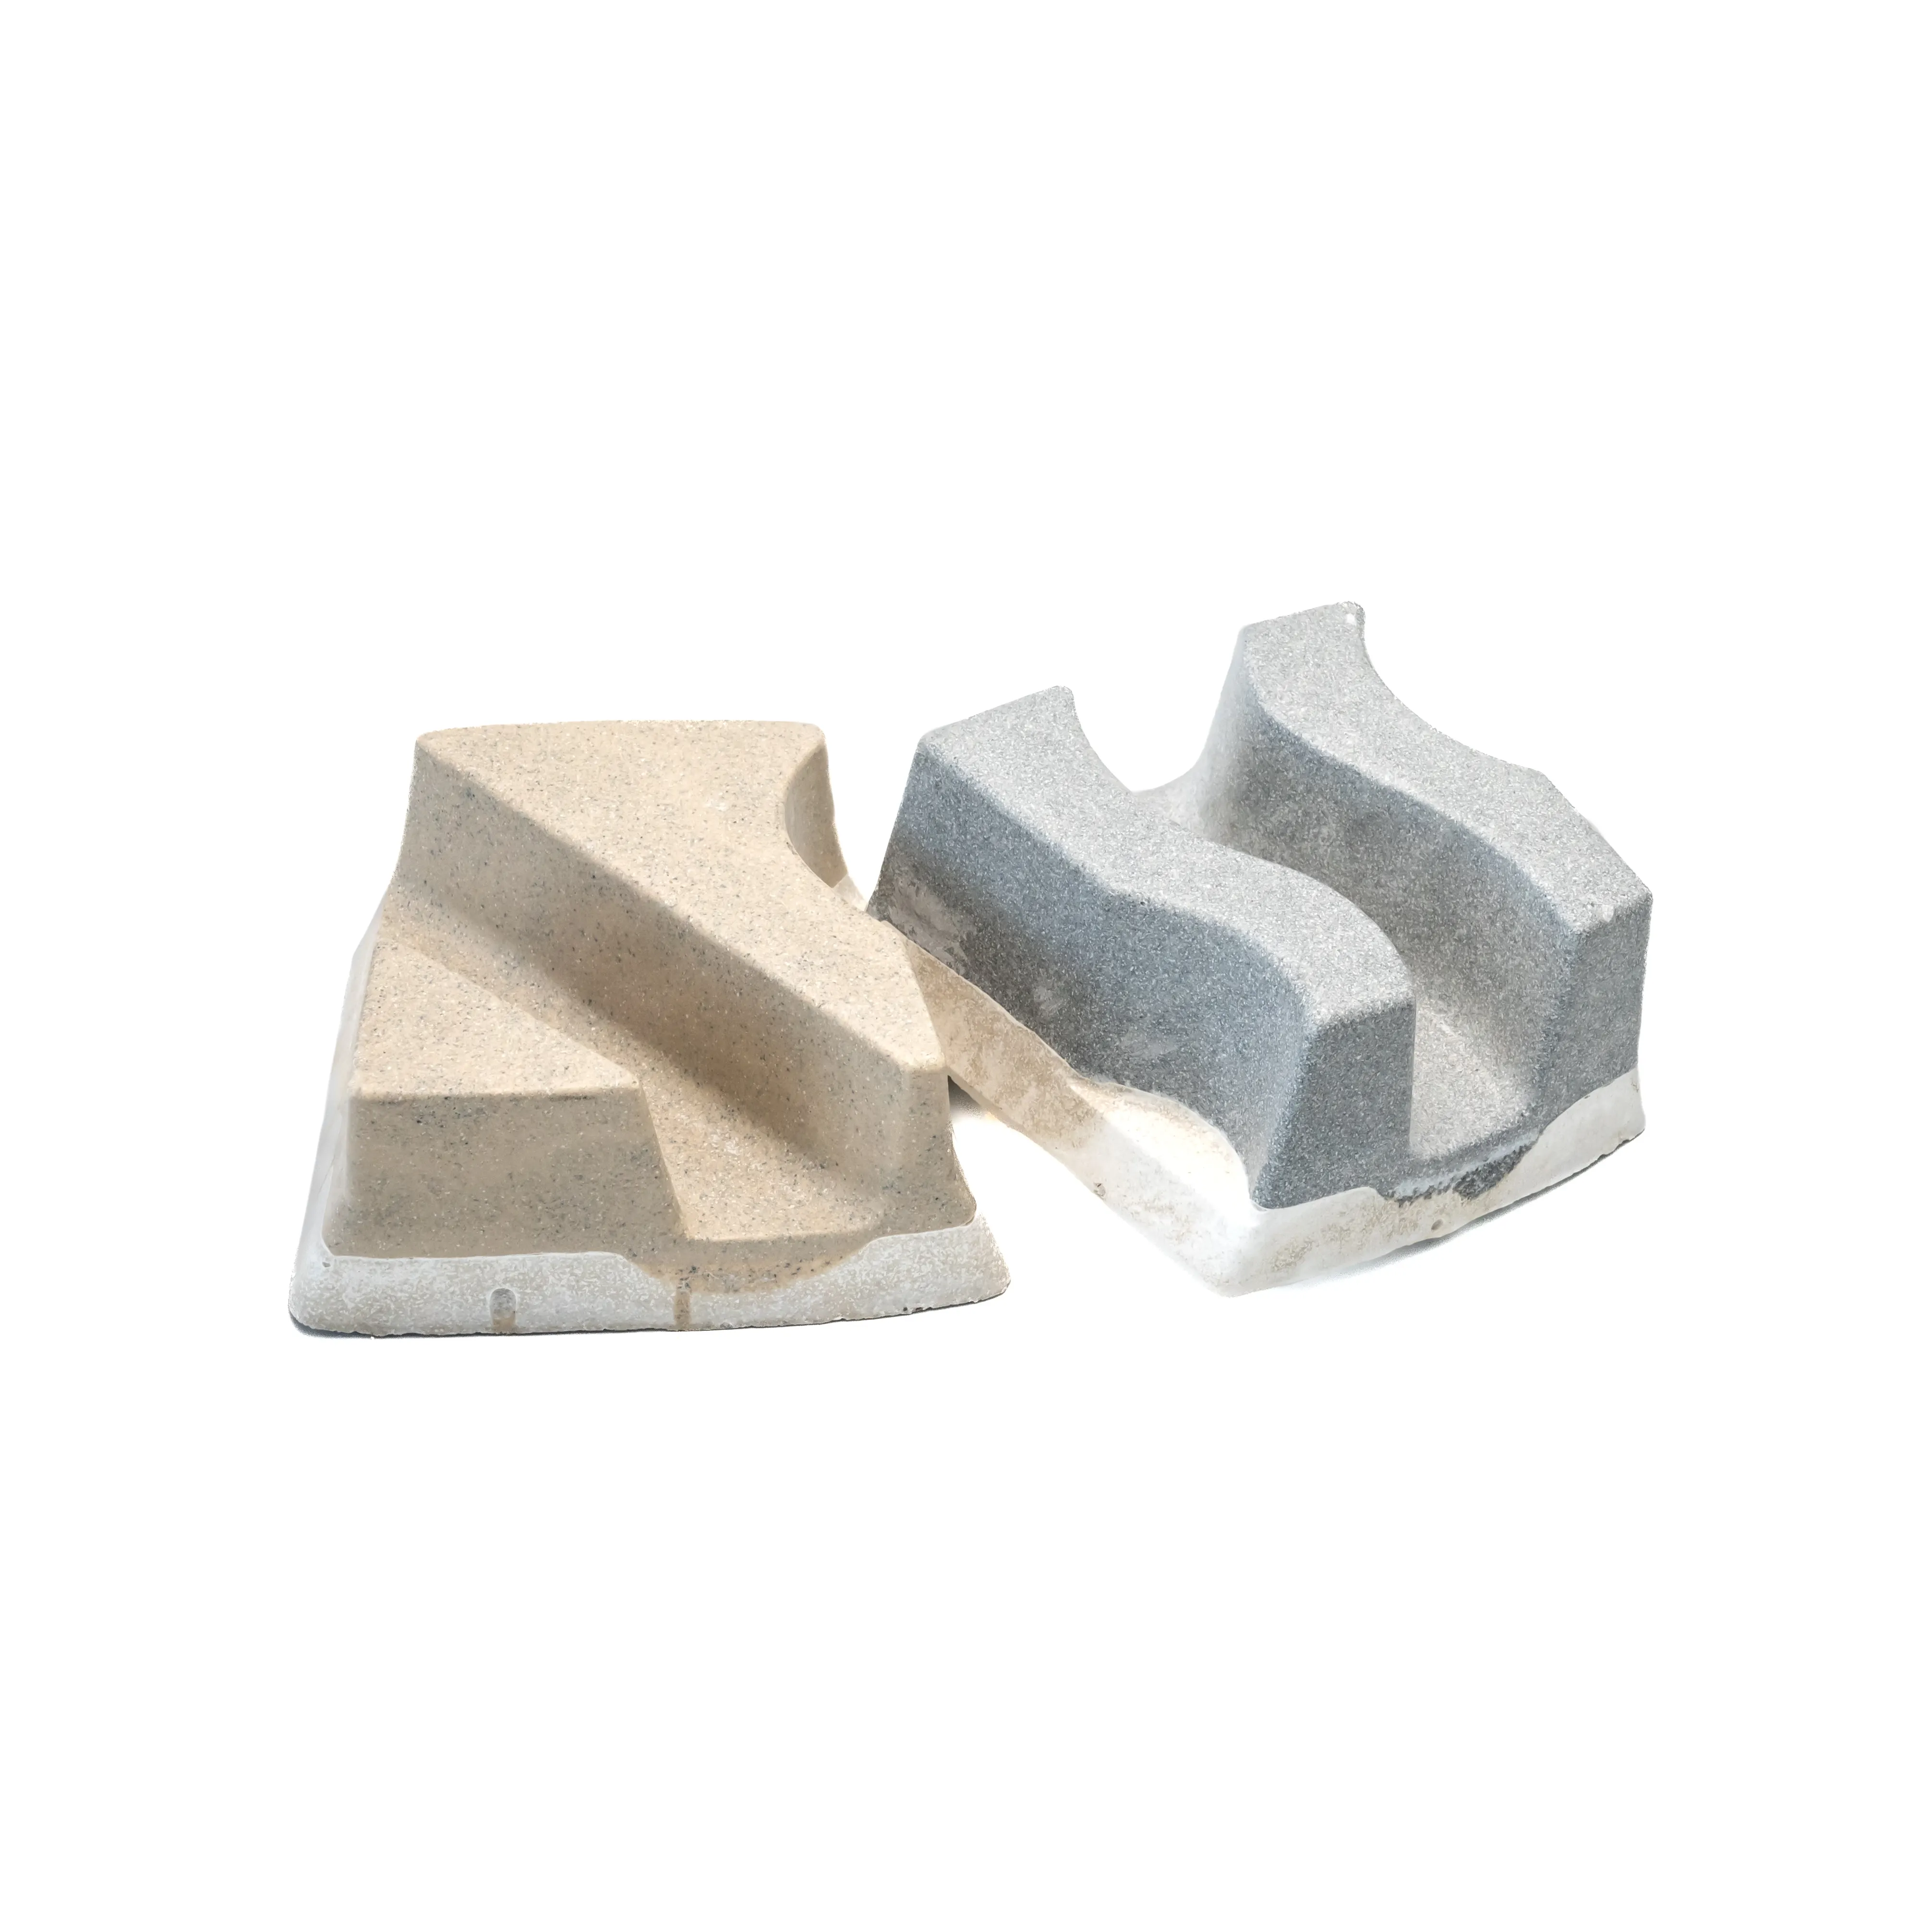 Ferramentas abrasivas de pedra de Frankfurt, ferramentas de diamante de magnesita para máquinas de polimento de pedra de granito